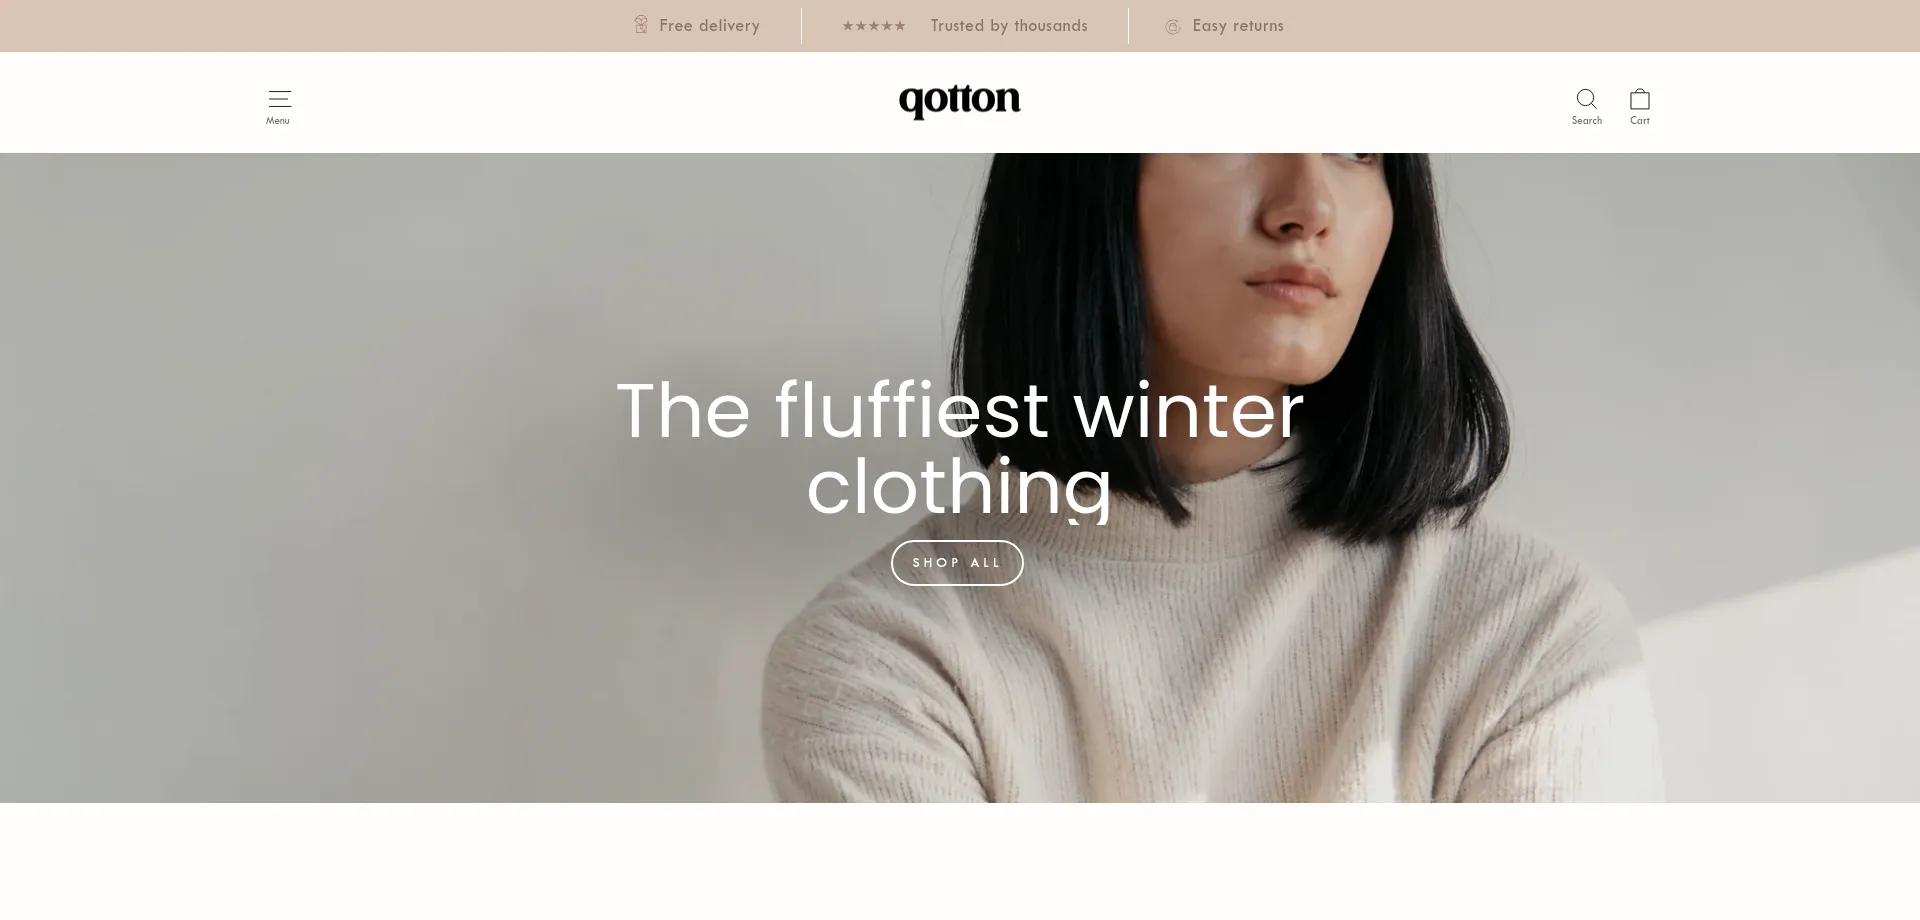 Qottonwear.com